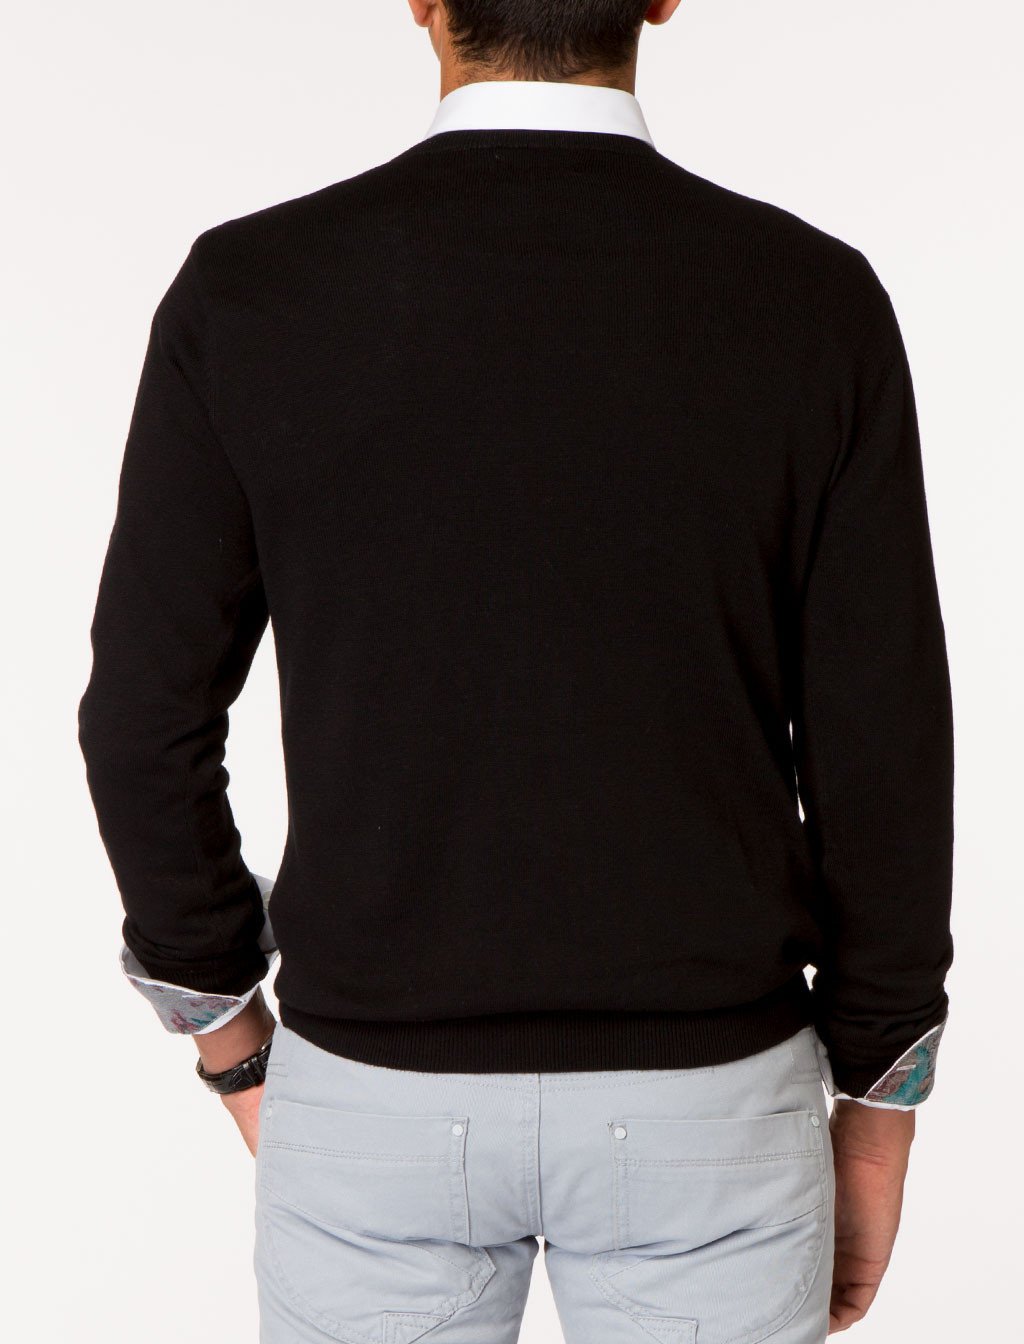 SABE Classic Crewneck Sweater Updated